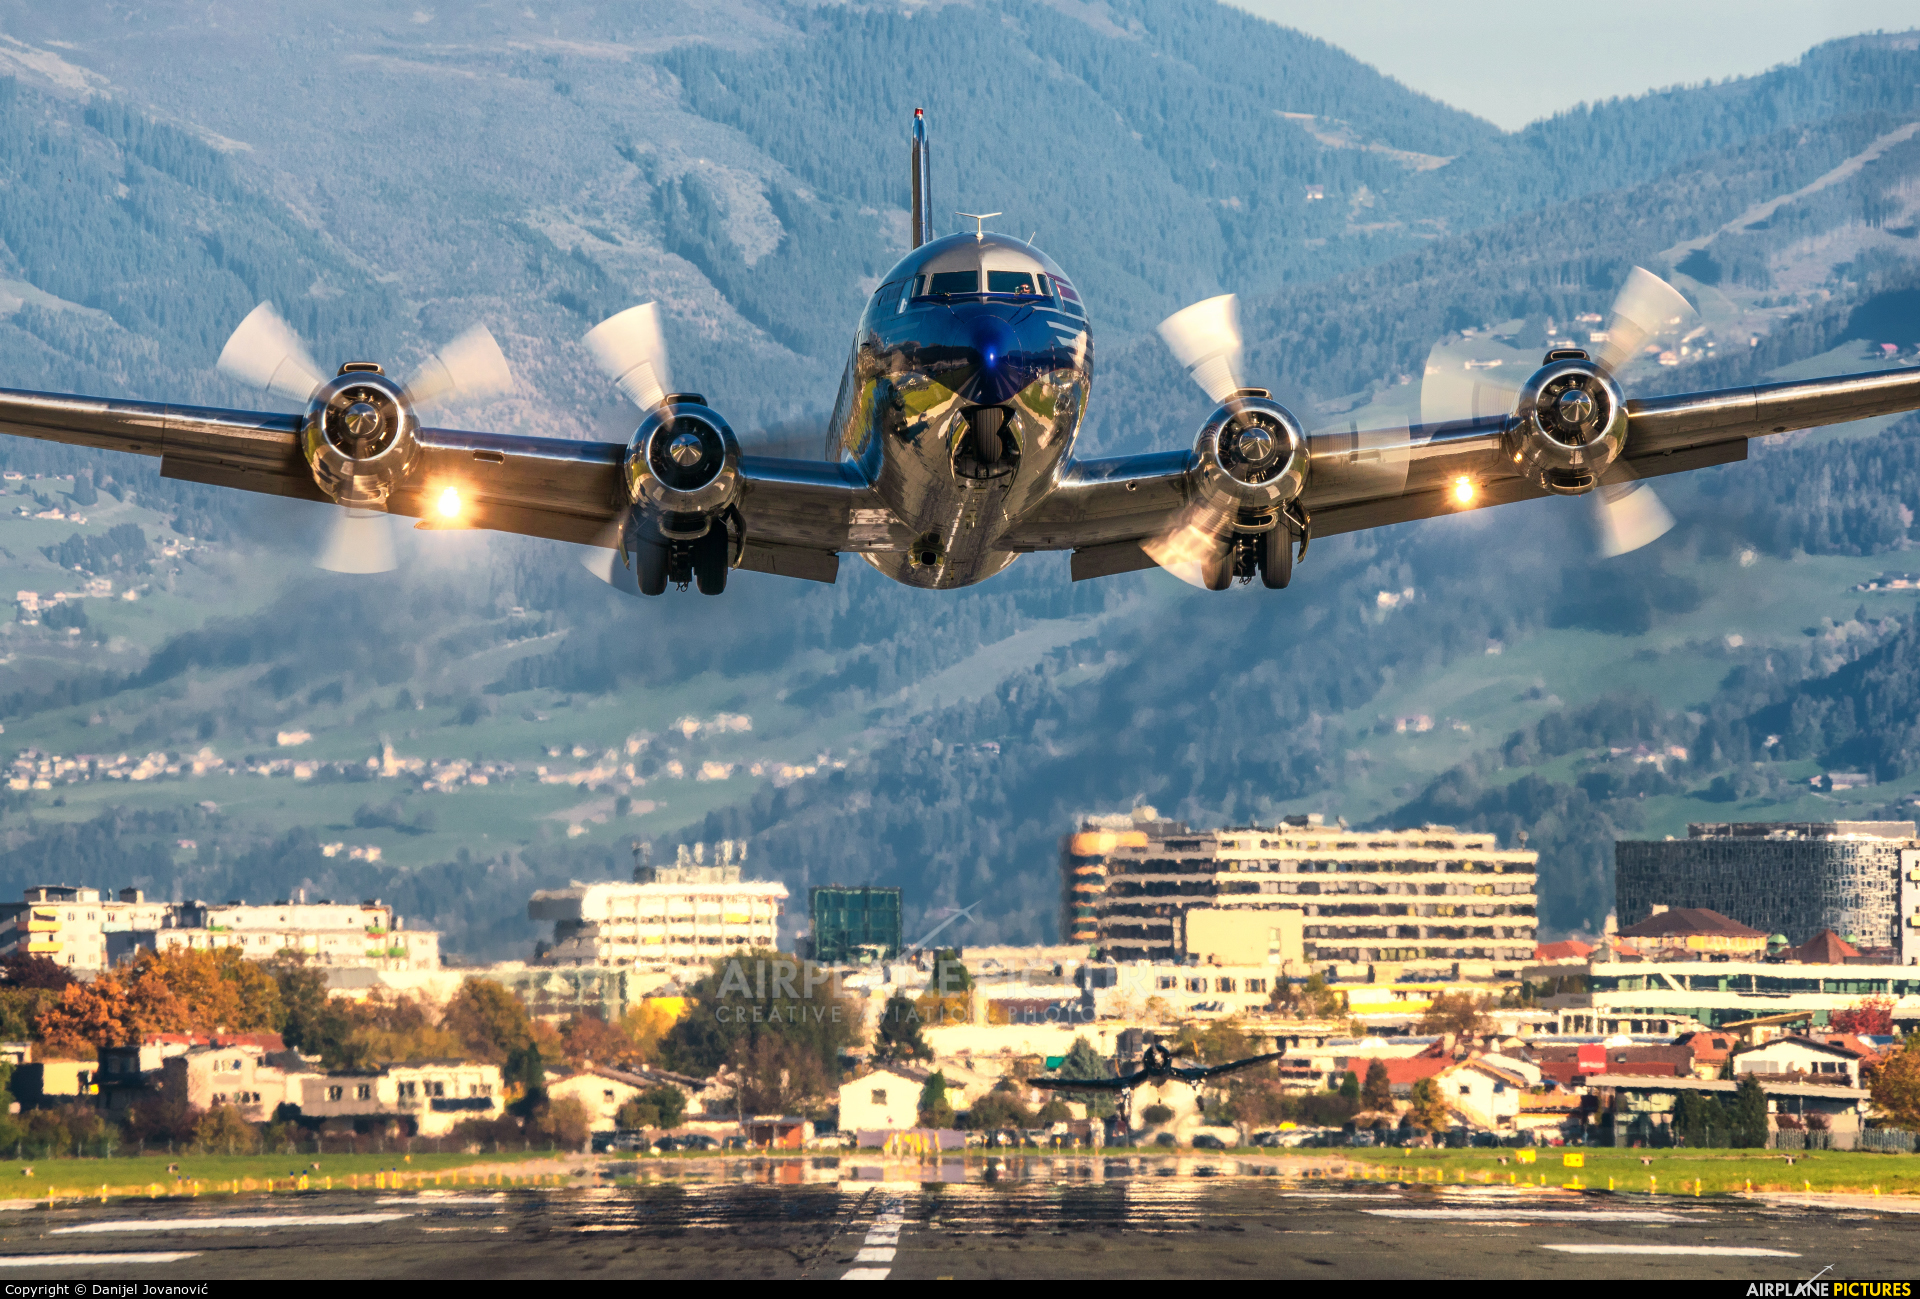 Red Bull OE-LDM aircraft at Innsbruck